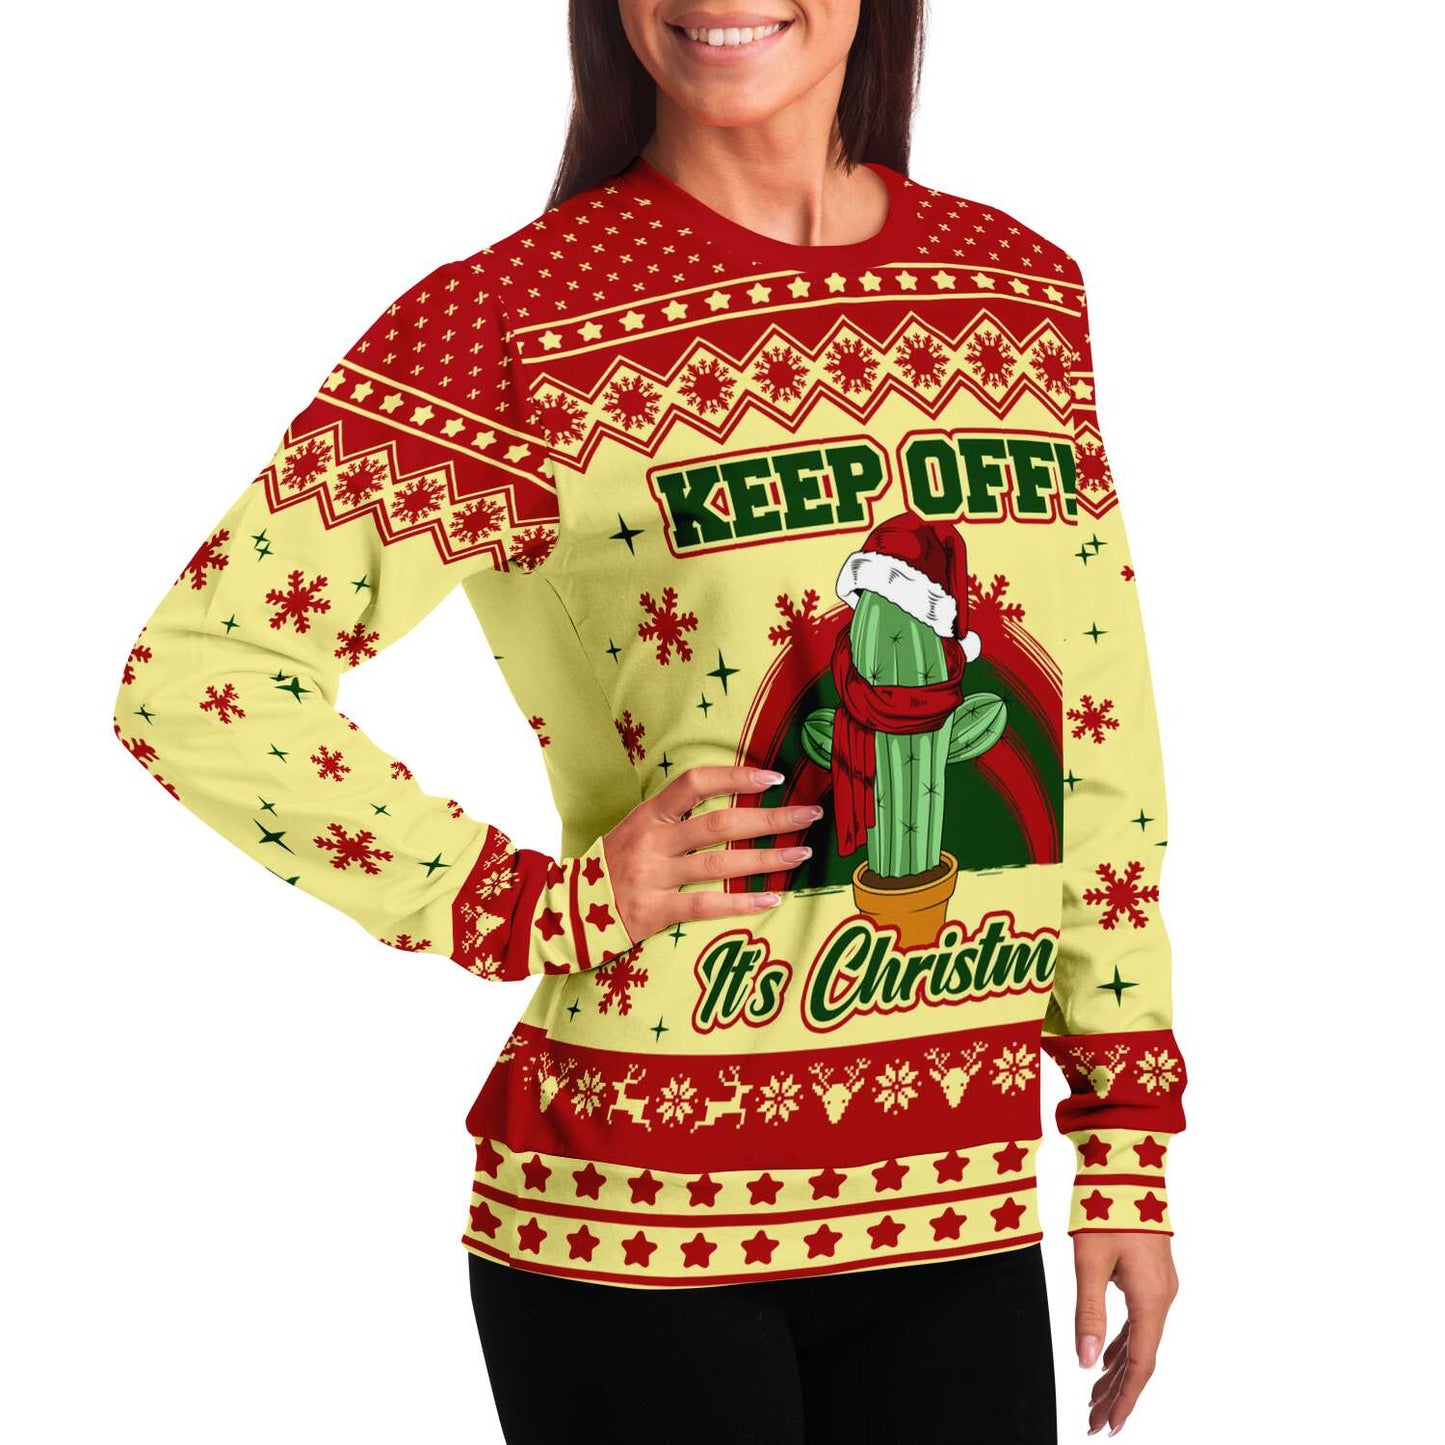 Keep Off Cactus Ugly Christmas Sweatshirt Fashion Sweatshirt - AOP Subliminator 